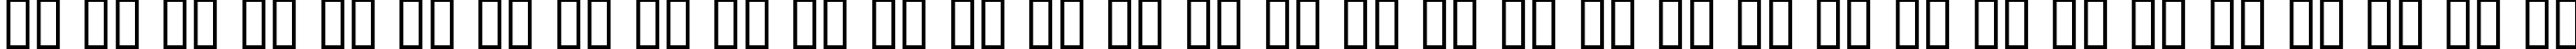 Пример написания русского алфавита шрифтом Maranallo